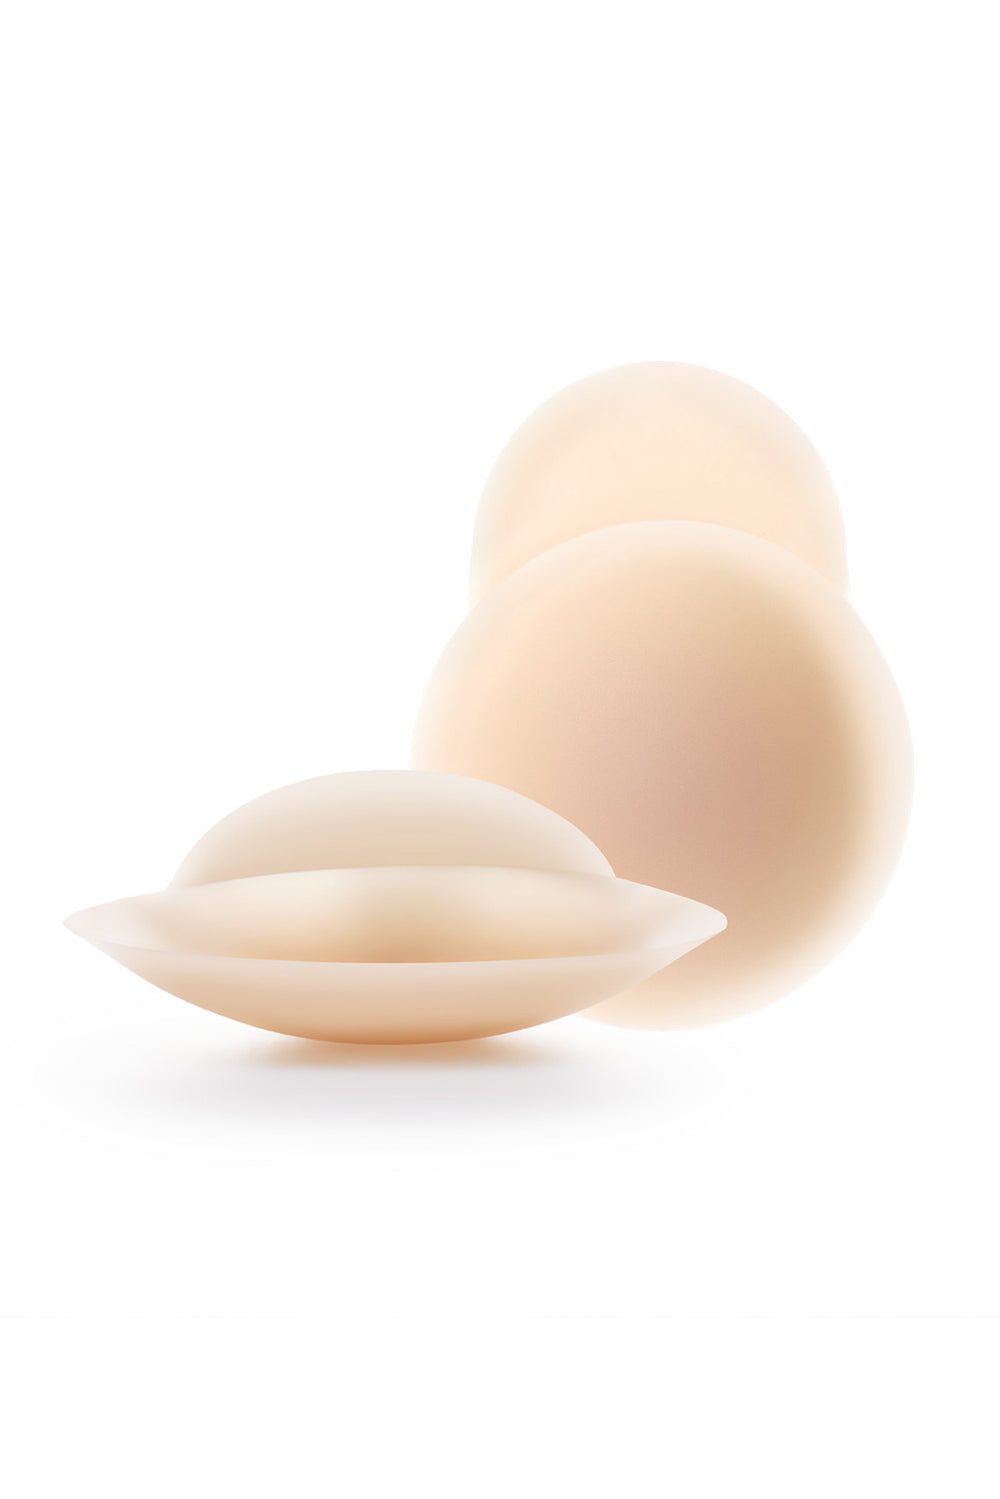 SWIM & INTIMATES Nippies Lifting Reusable Adhesive Nipple Covers - Caramel